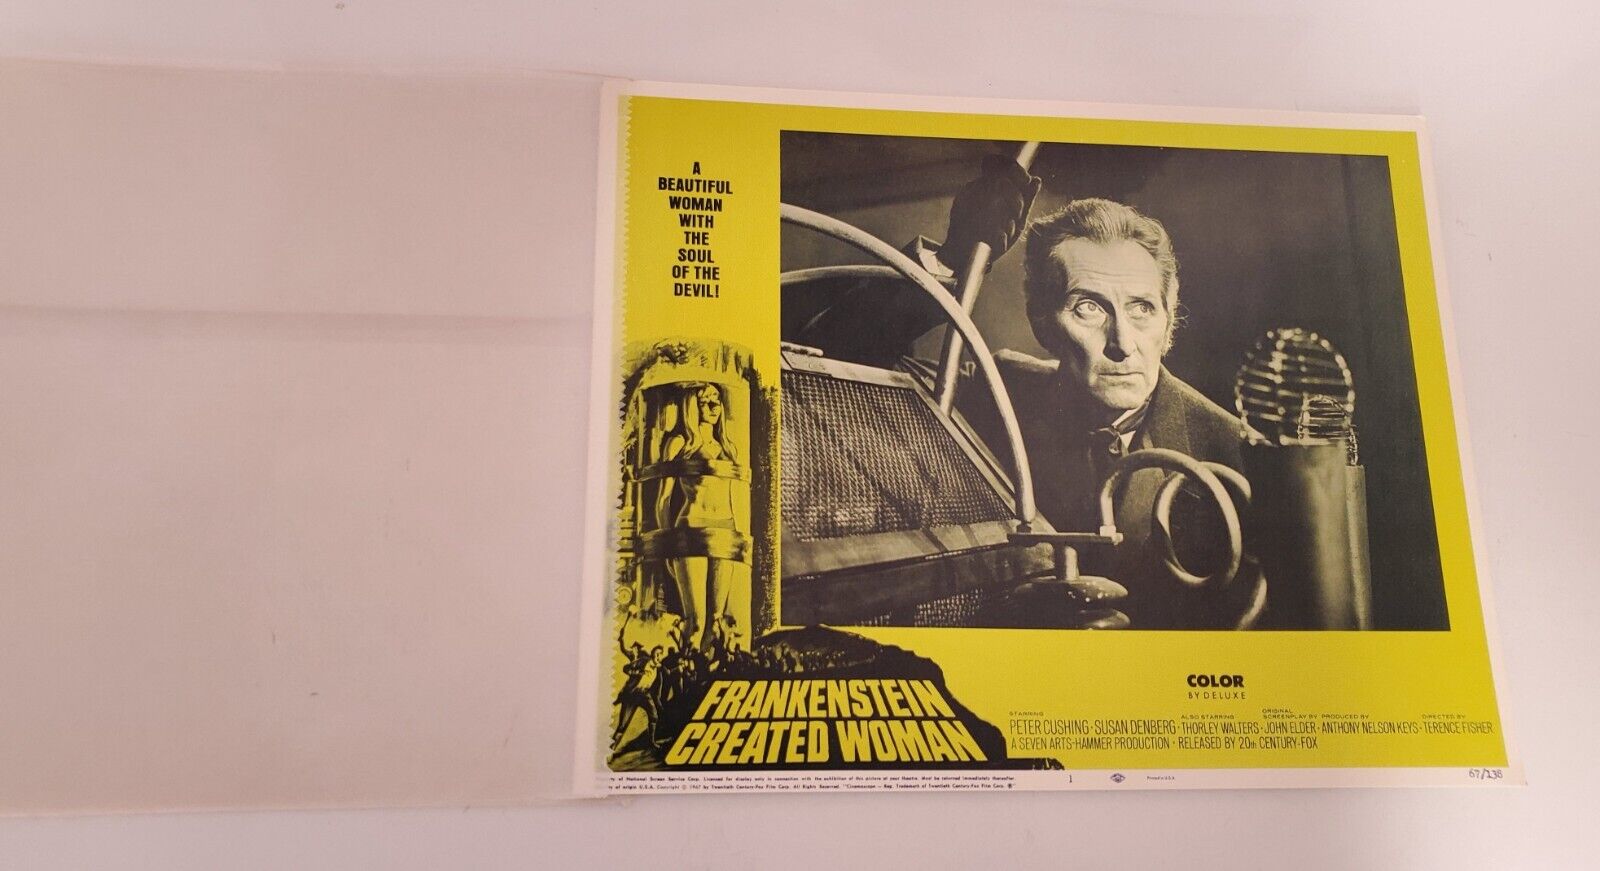  Theater lobby card set 1967  New Horror Frankenstein created woman